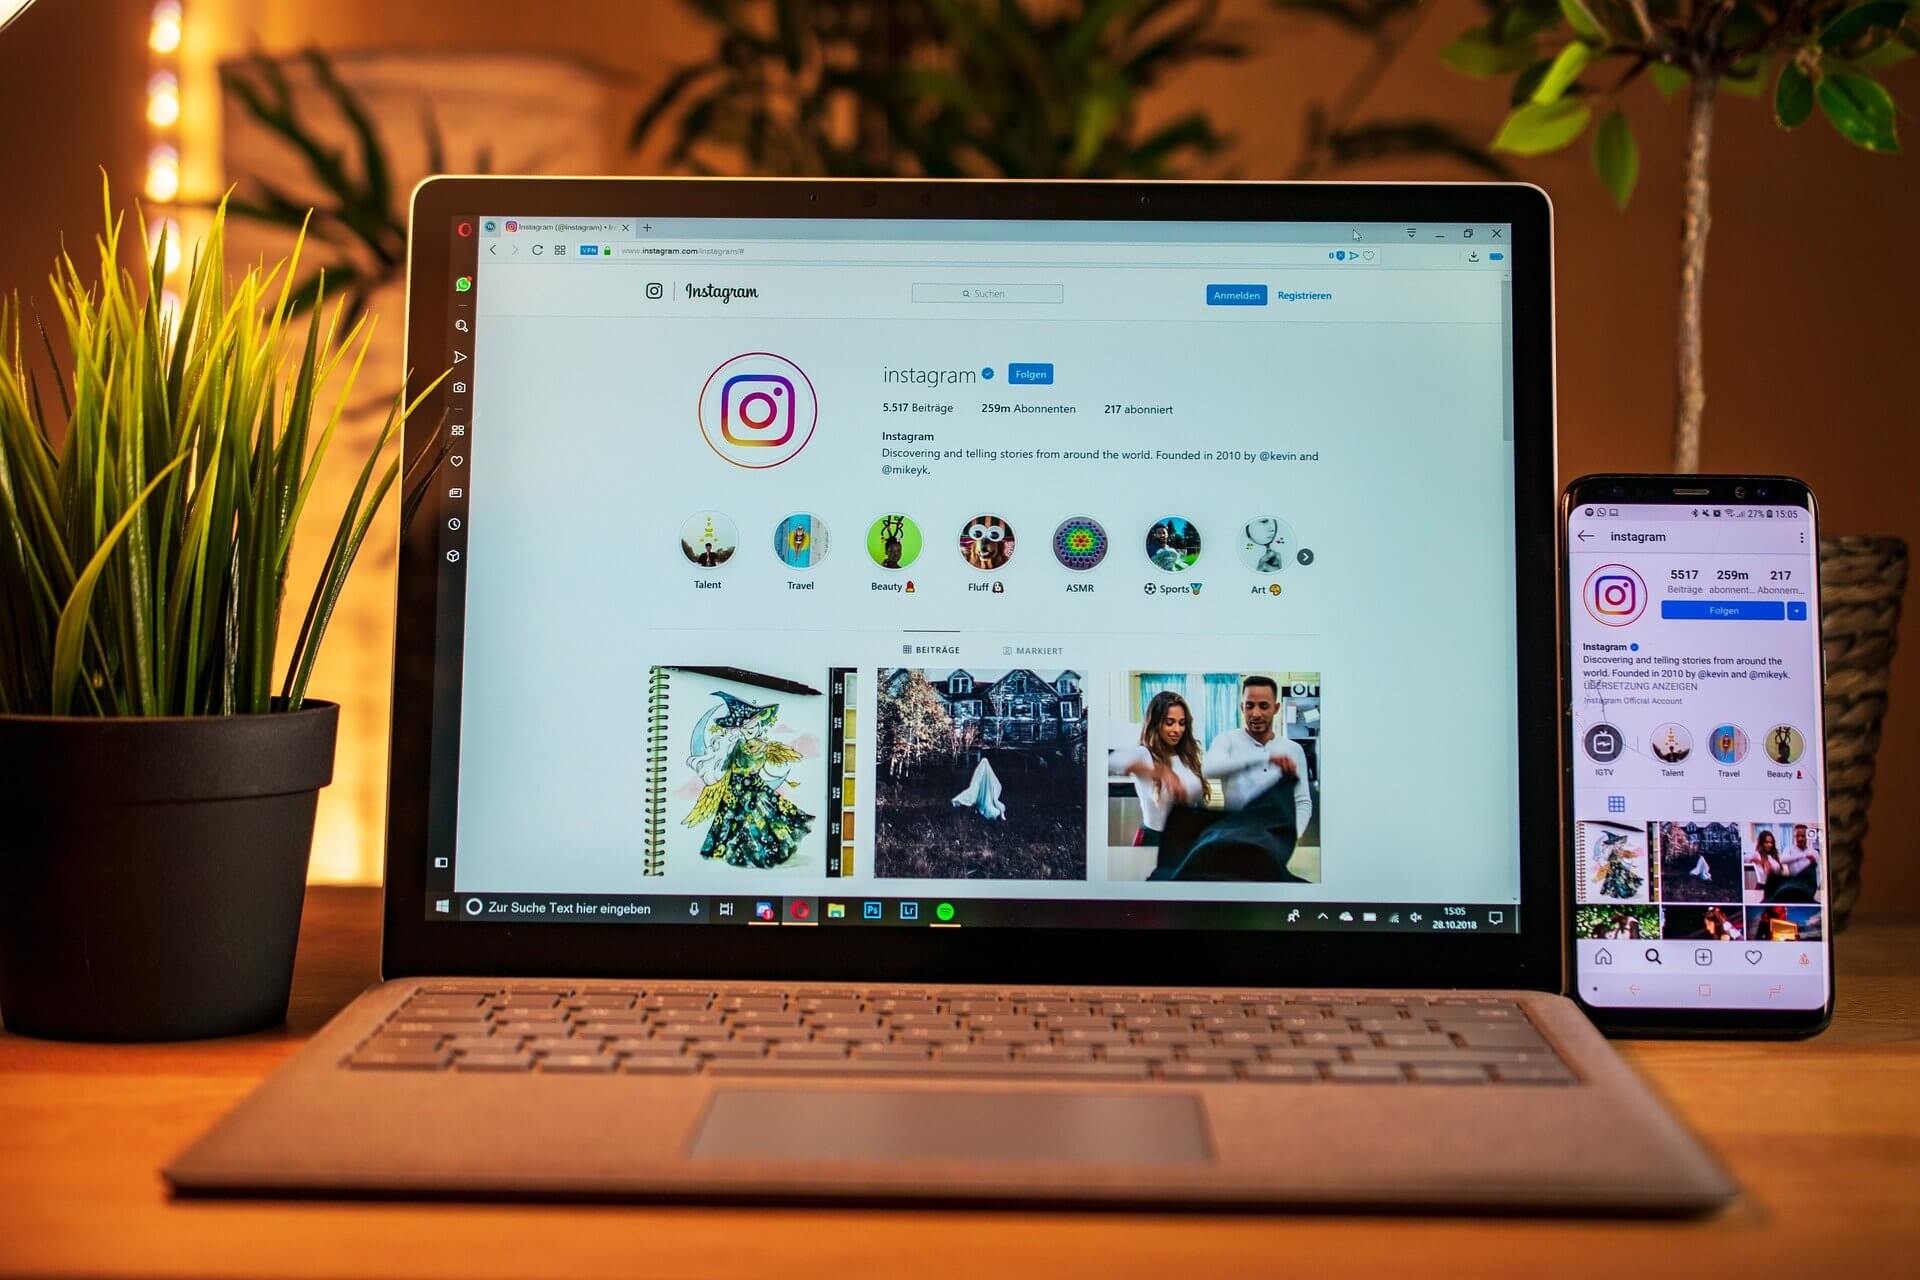 Instagram's New Full-screen Home Feed